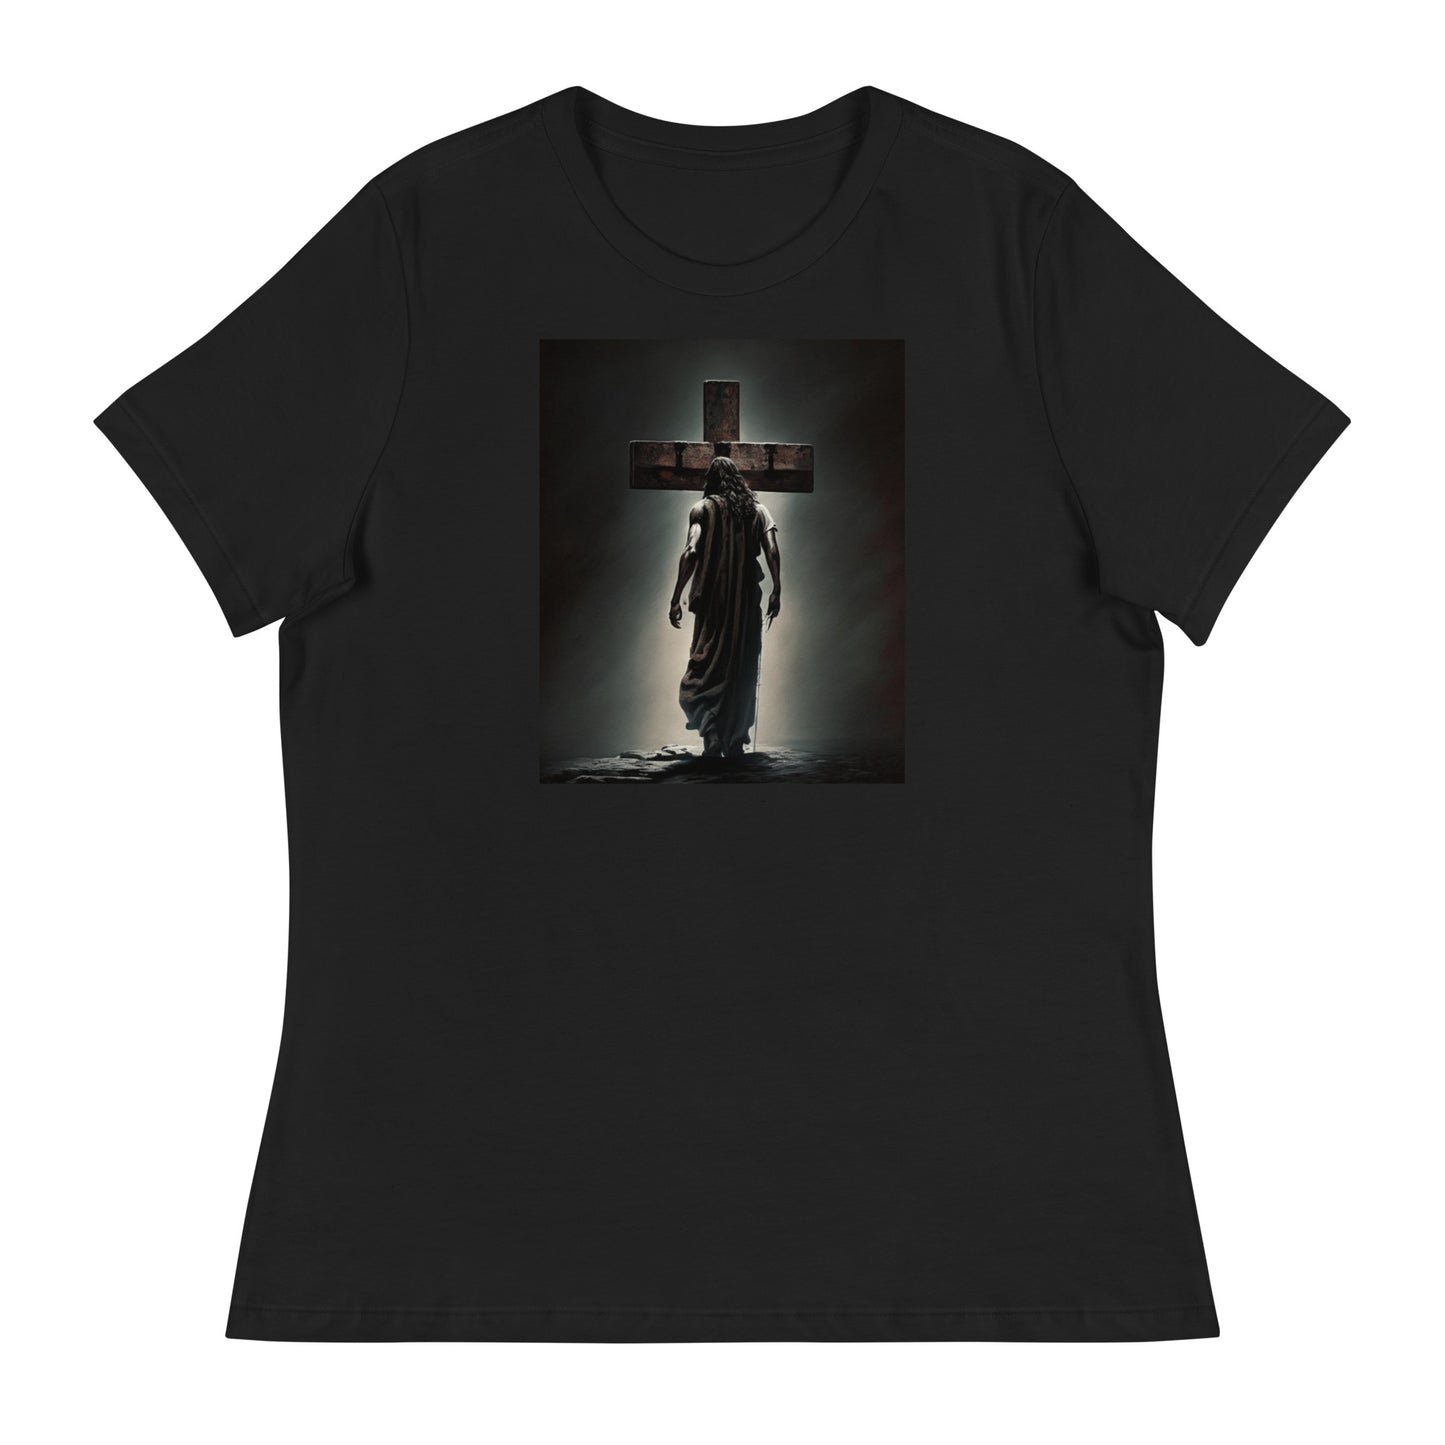 Christ Facing the Cross Christian Women's T-shirt Black